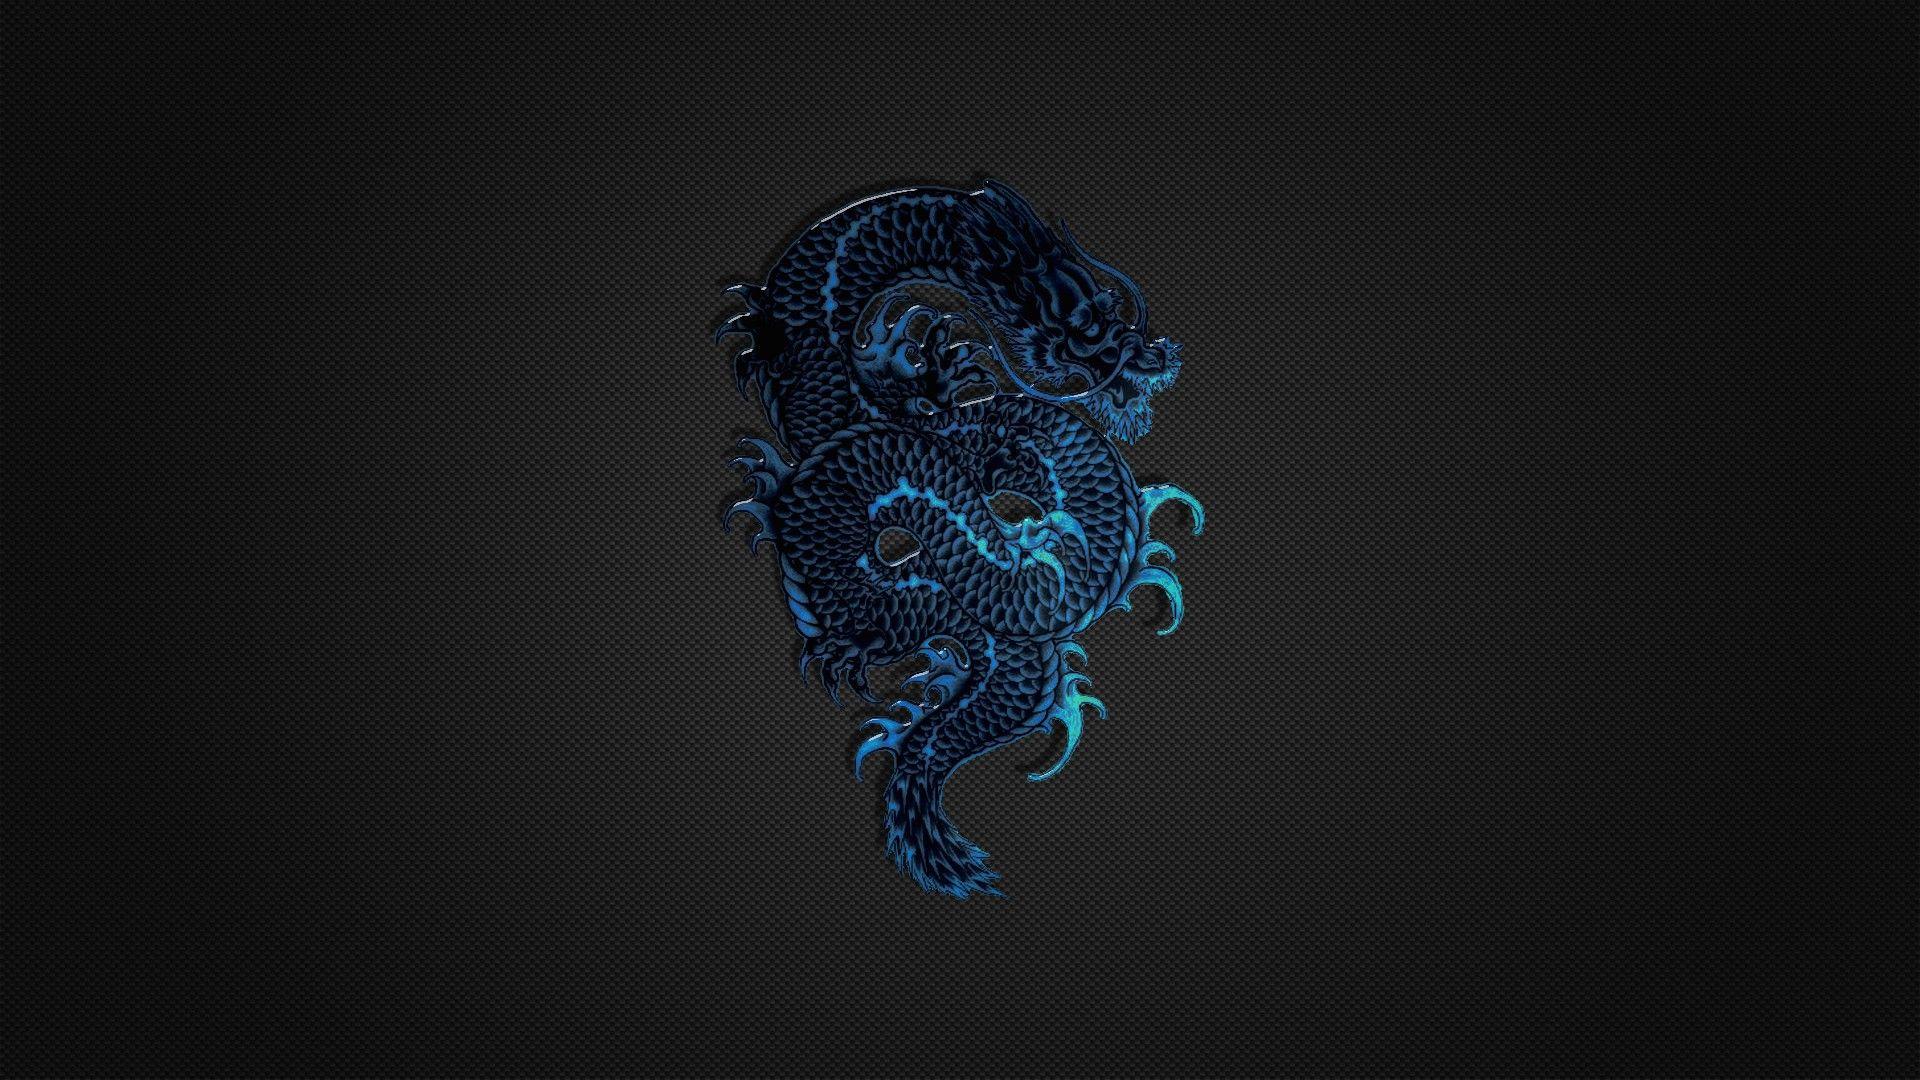 Abstract Black Blue Carbon Fiber Dragons Minimalistic